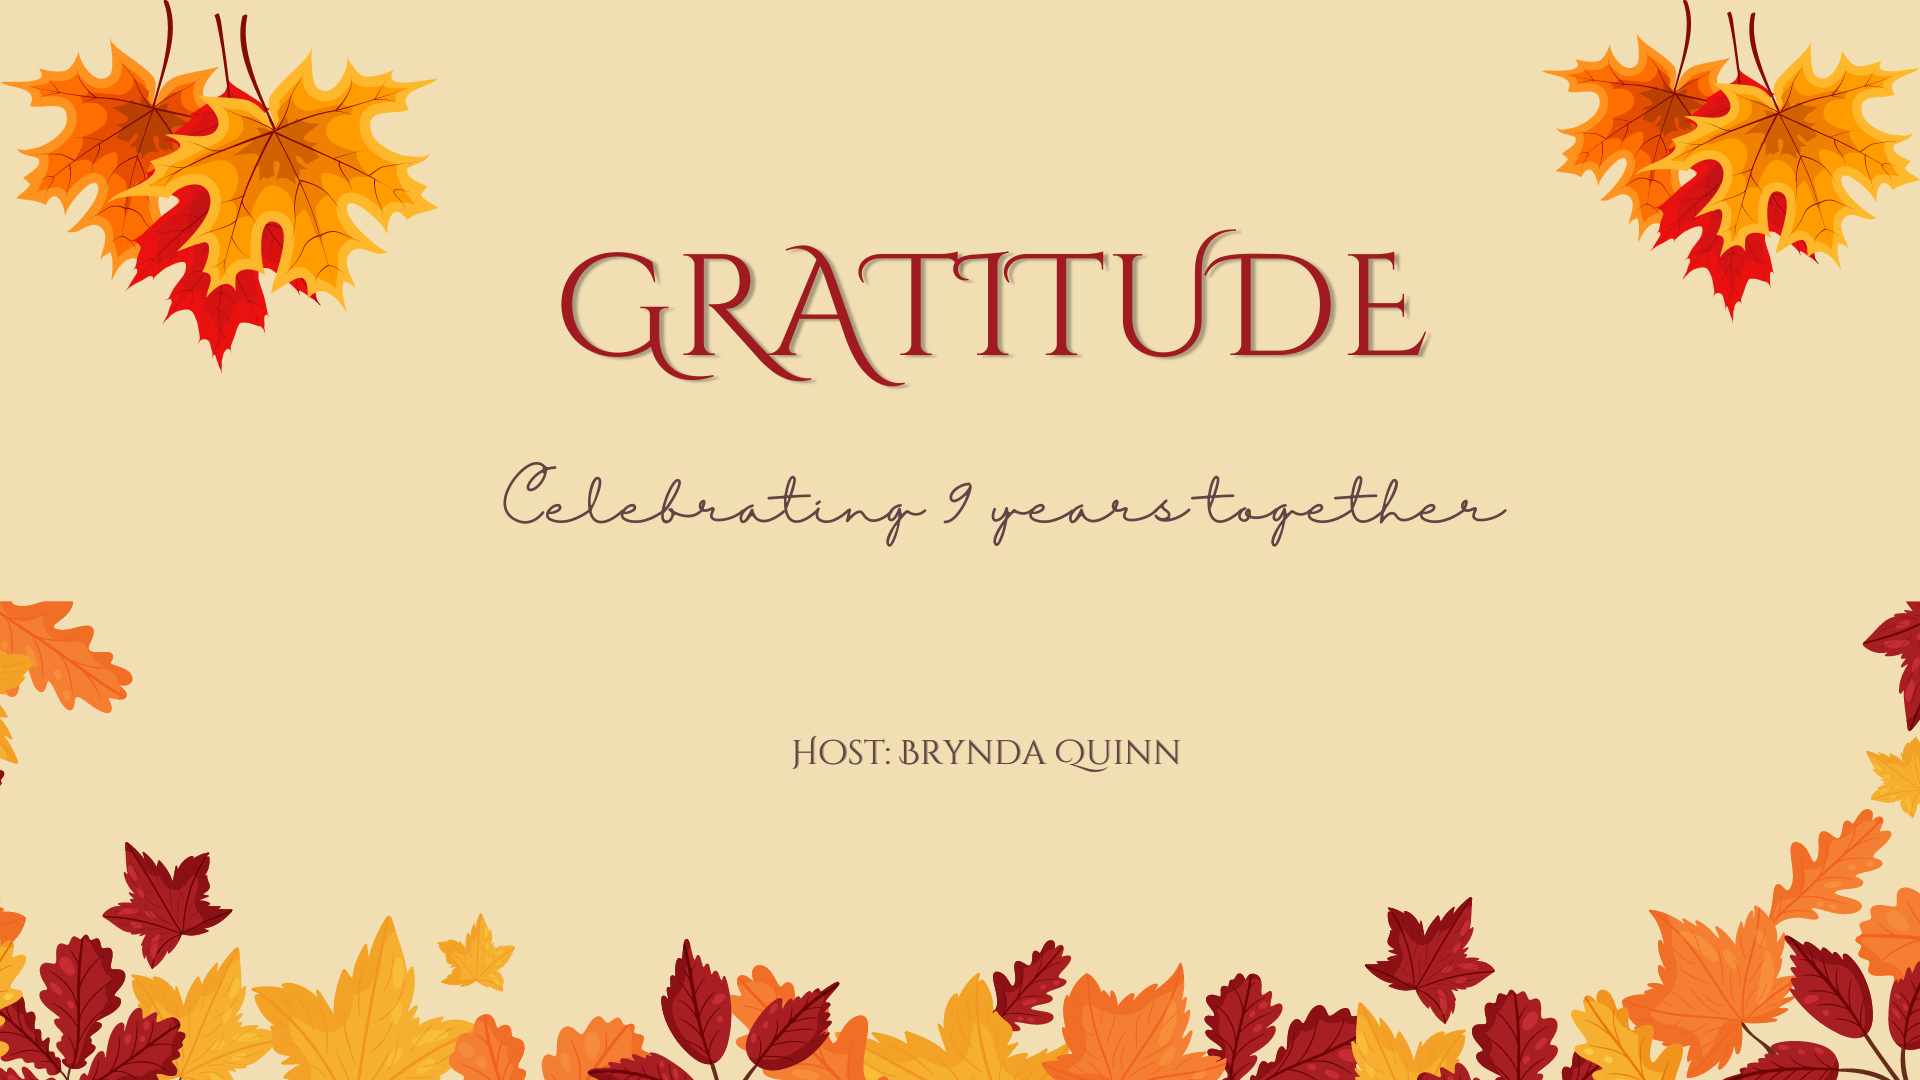 Gratitude - Celebrating 9 years together